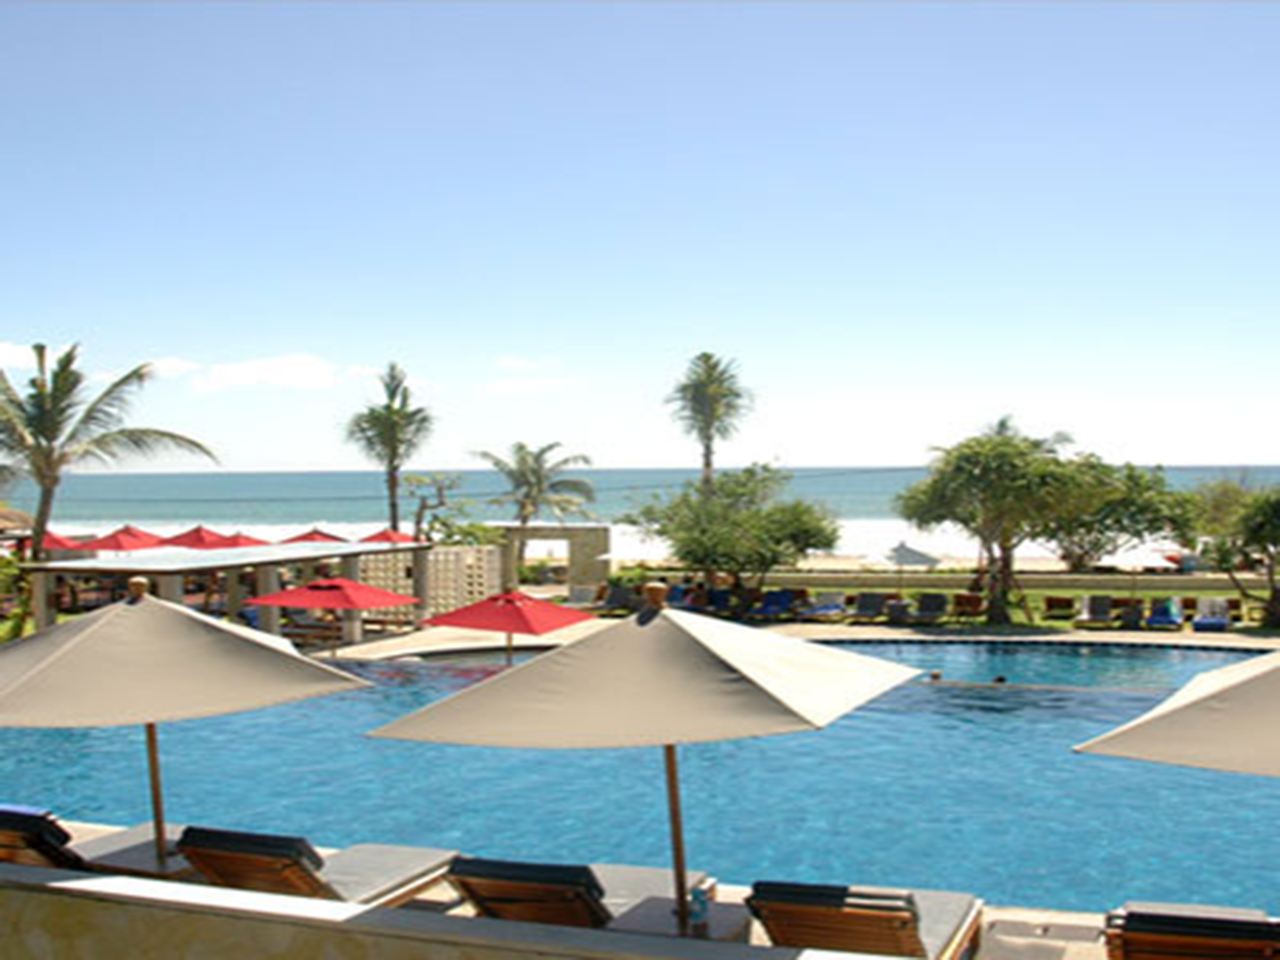 
Bali Niksoma Boutique Beach Resort